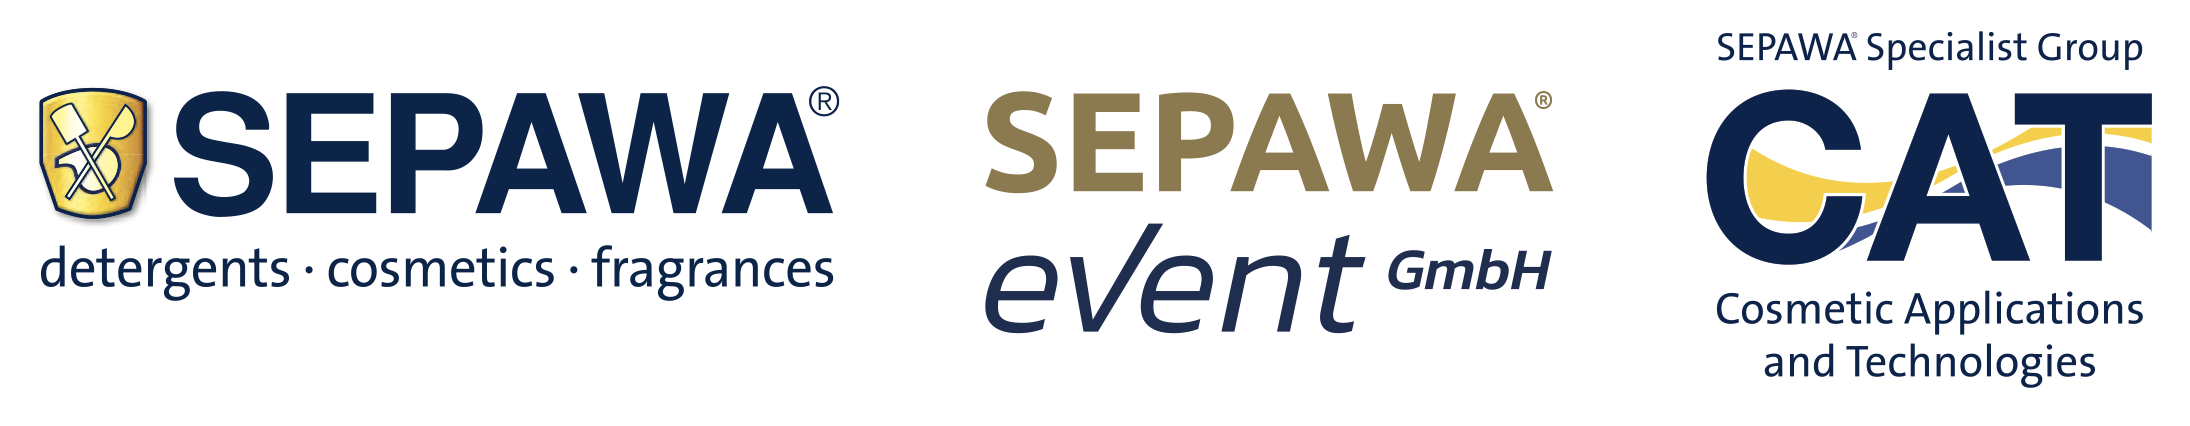 Vortragsveranstaltung der SEPAWA® Fachgruppe Cosmetic Applications and Technologies